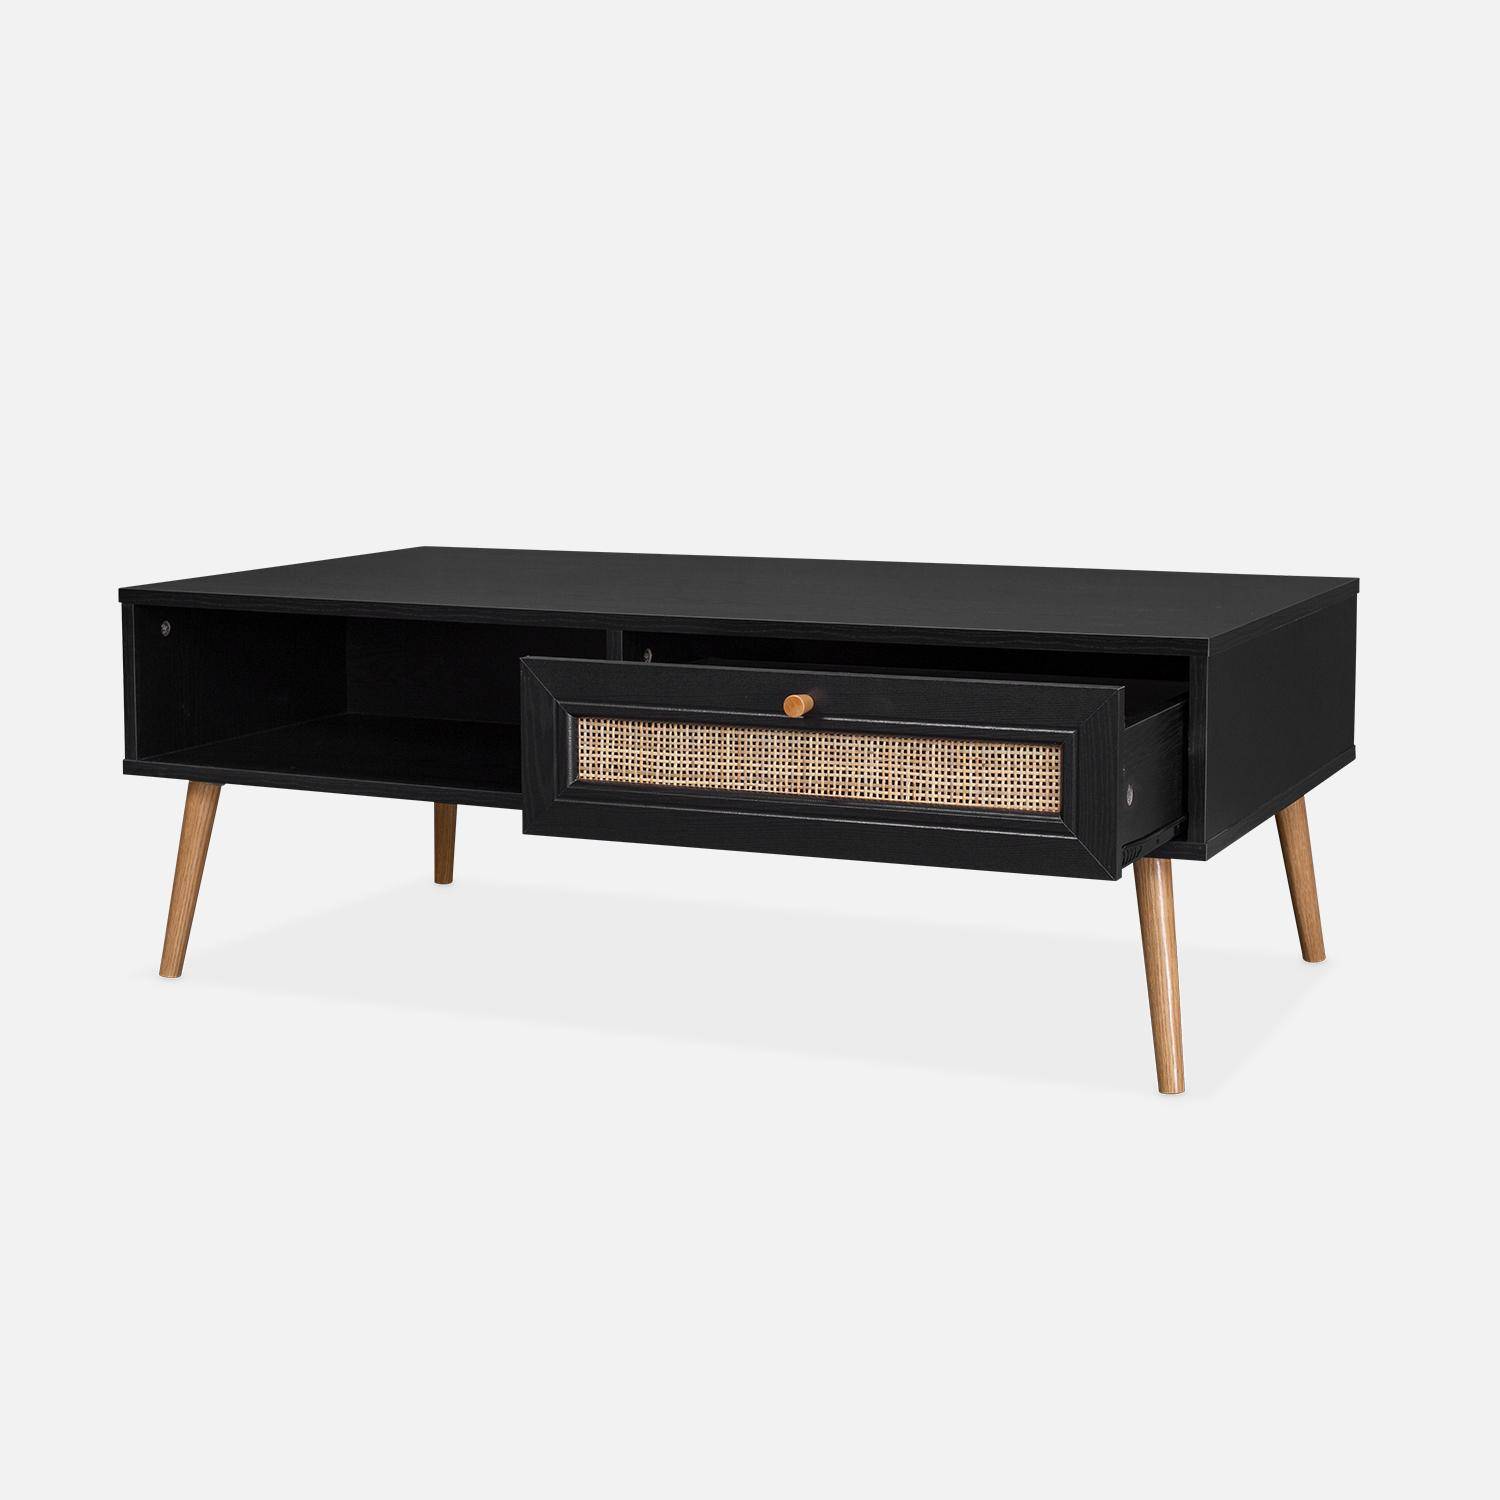  Wood and woven rattan coffee table with storage, 110x59x39cm, black, Boheme Photo4